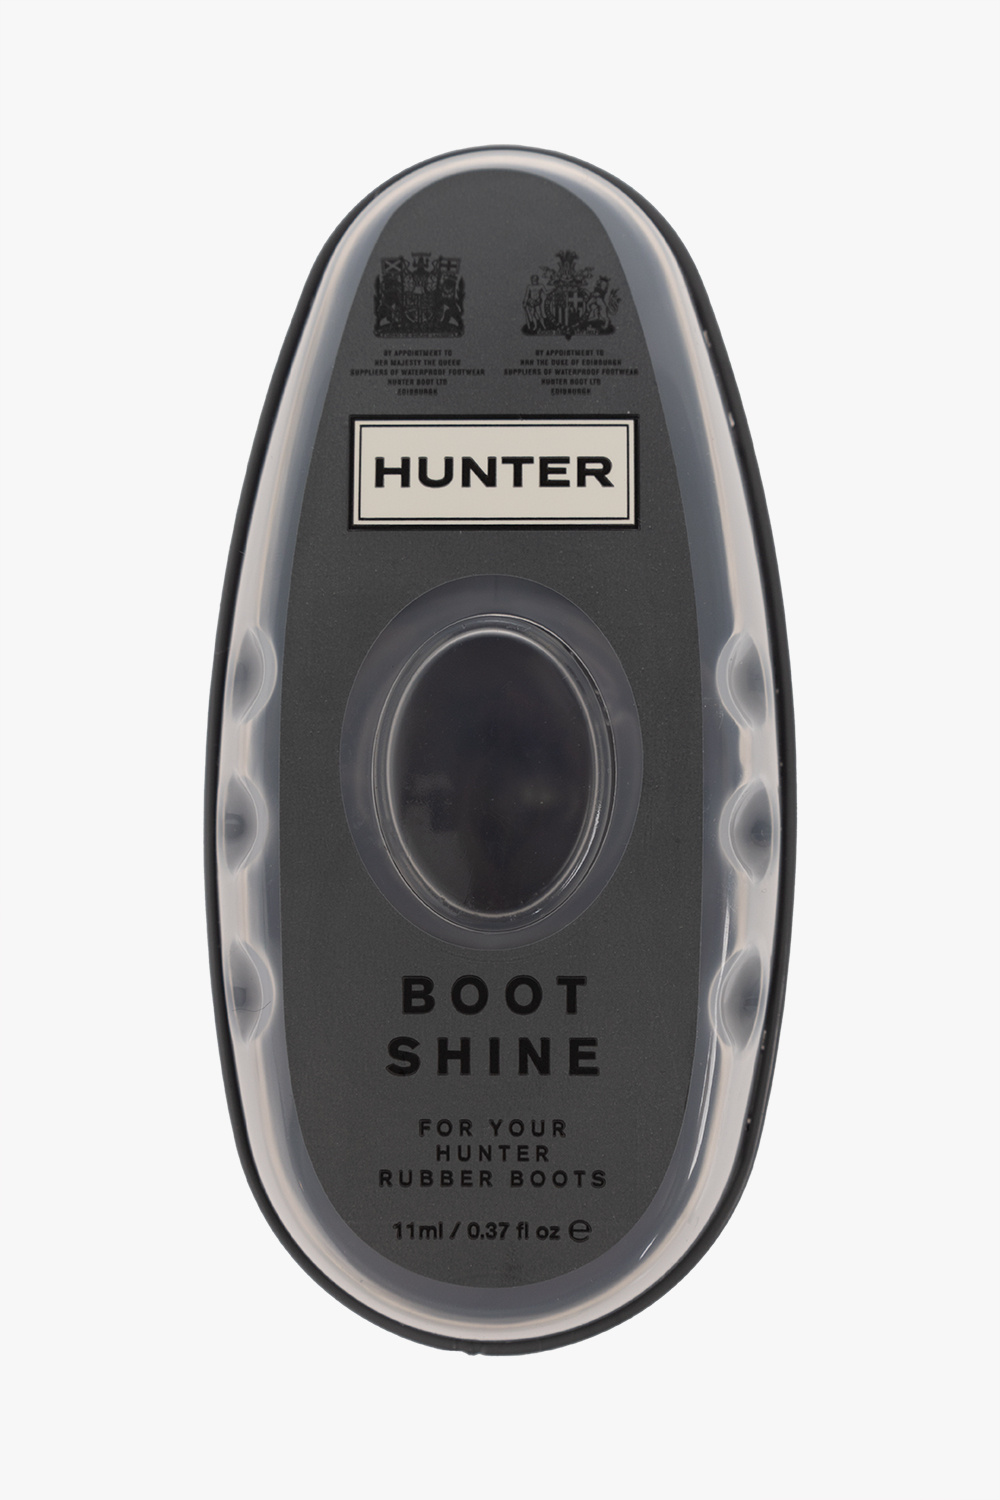 Hunter Rubber Hiking boot care kit